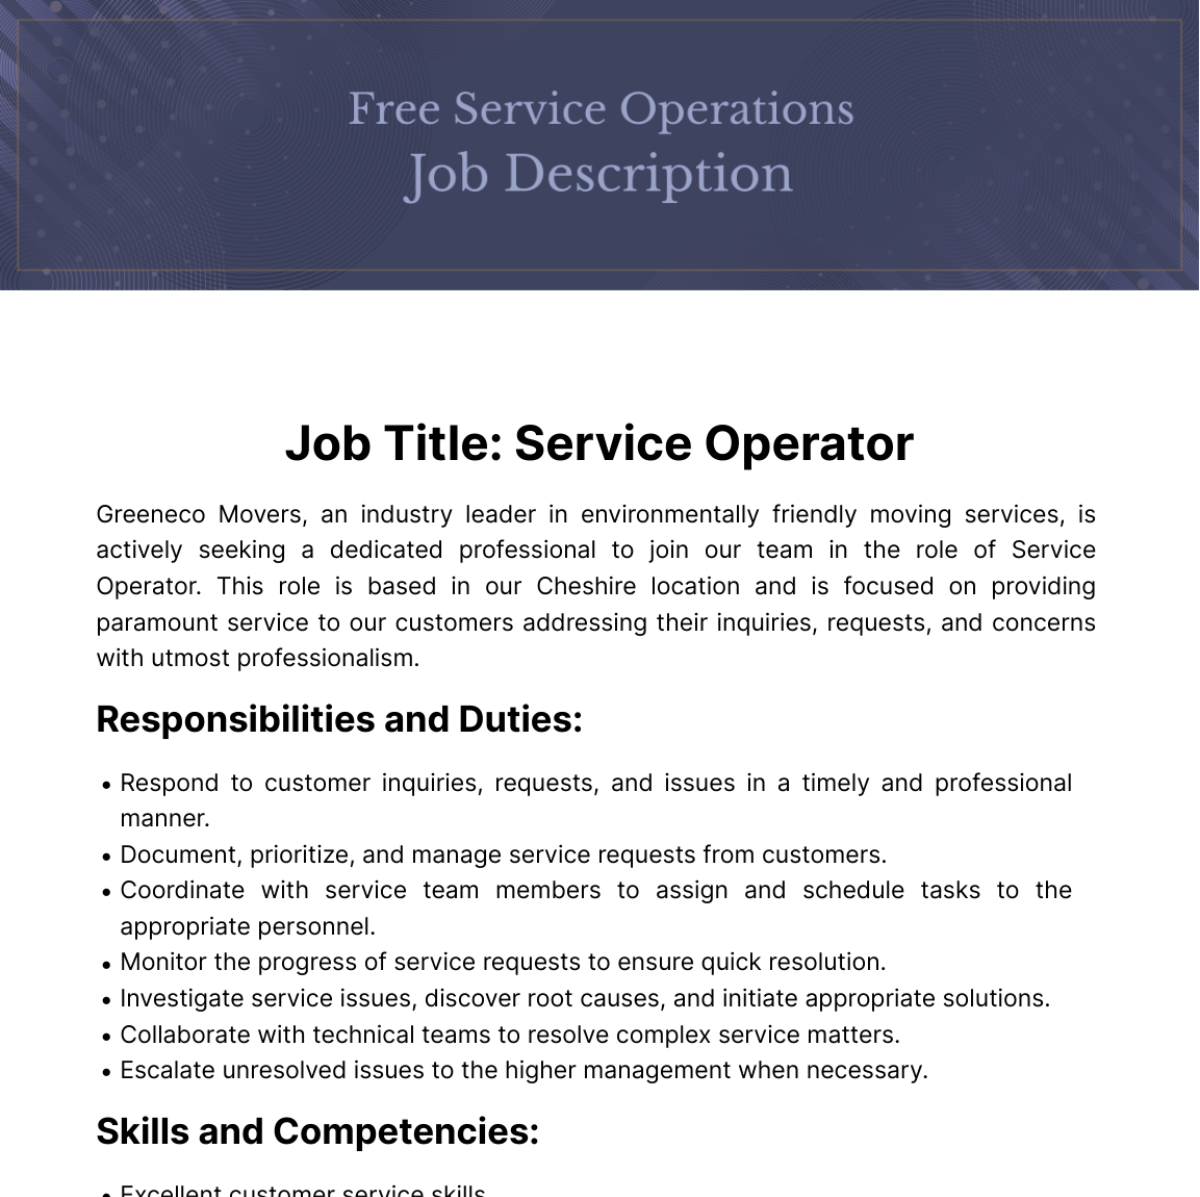 Service Operations Job Description Template